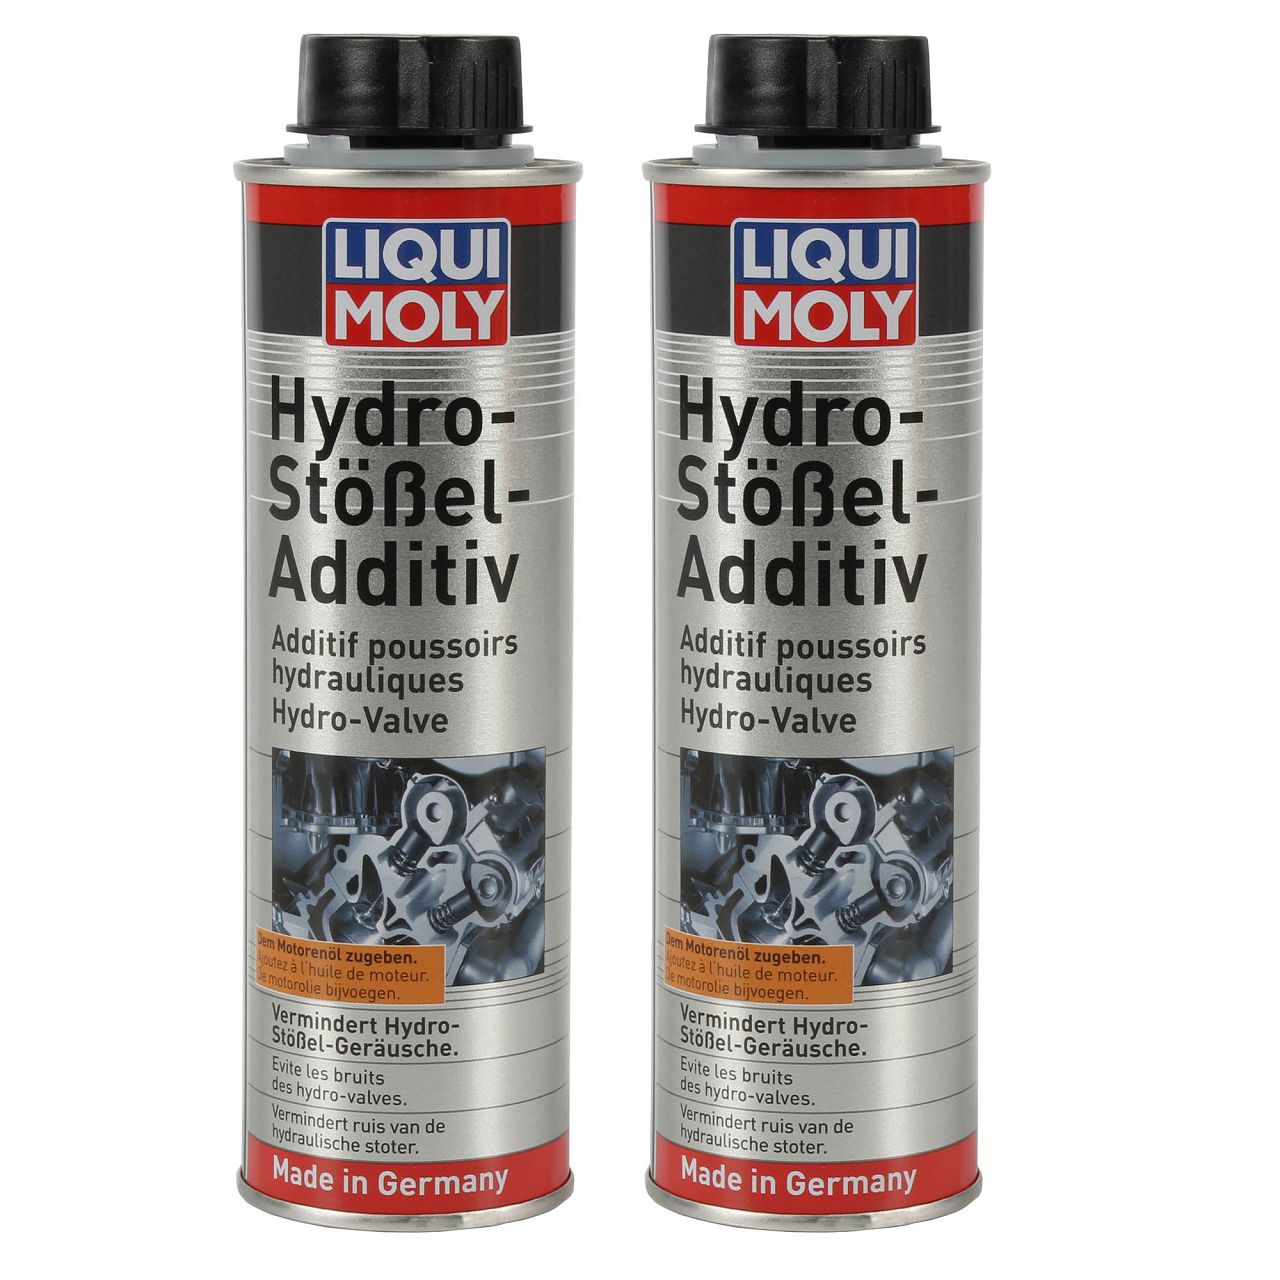 2x 300ml LIQUI MOLY 1009 Hydro-Stößel-Additiv Hydrostößel Reiniger